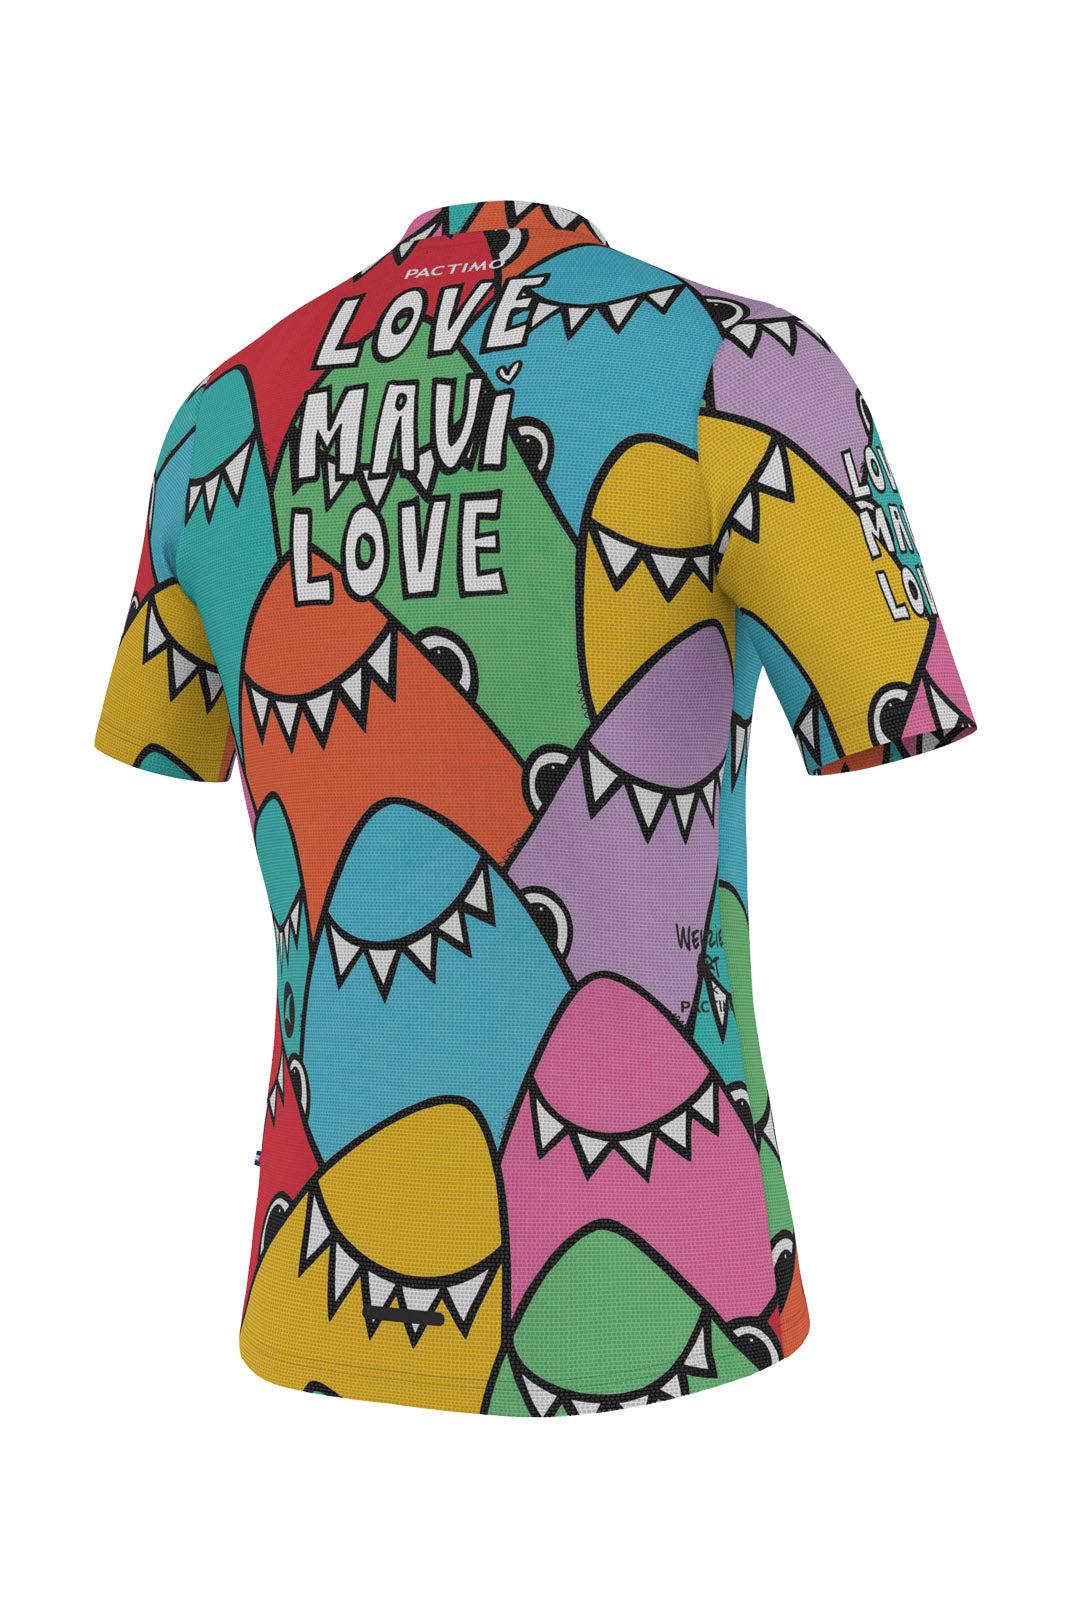 Men's Maui Relief Shirt - Rainbow Welzie Design - Back View